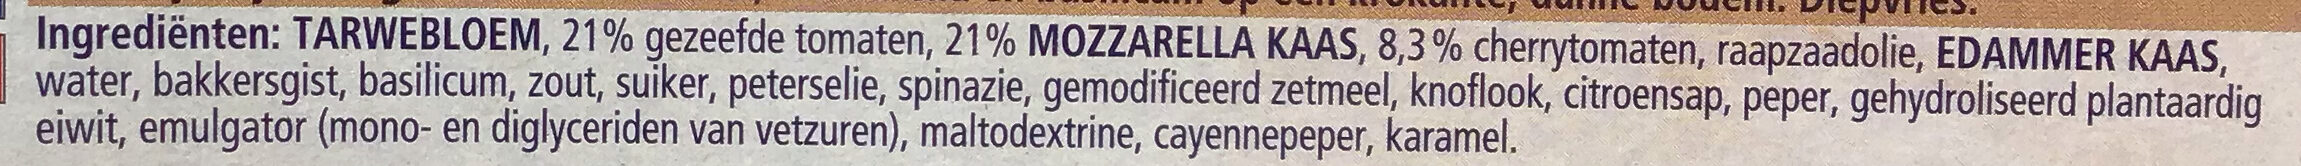 Ristorante Pizza Mozzarella - Ingrediënten